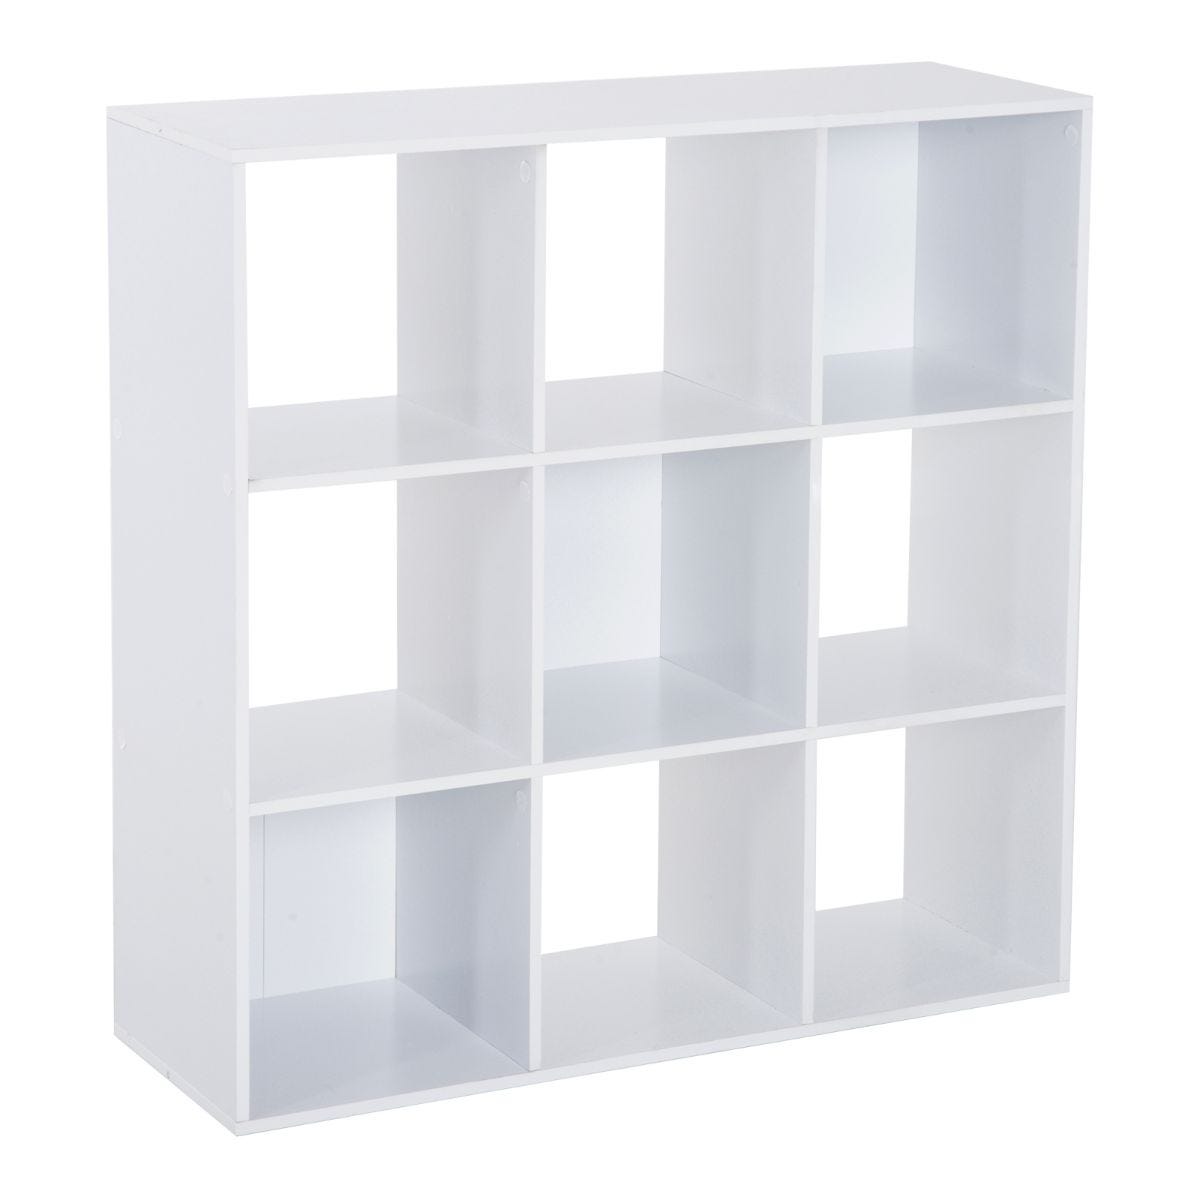 Homcom 9 Cube Medium Height Storage Unit Bookcase Display Shelves White